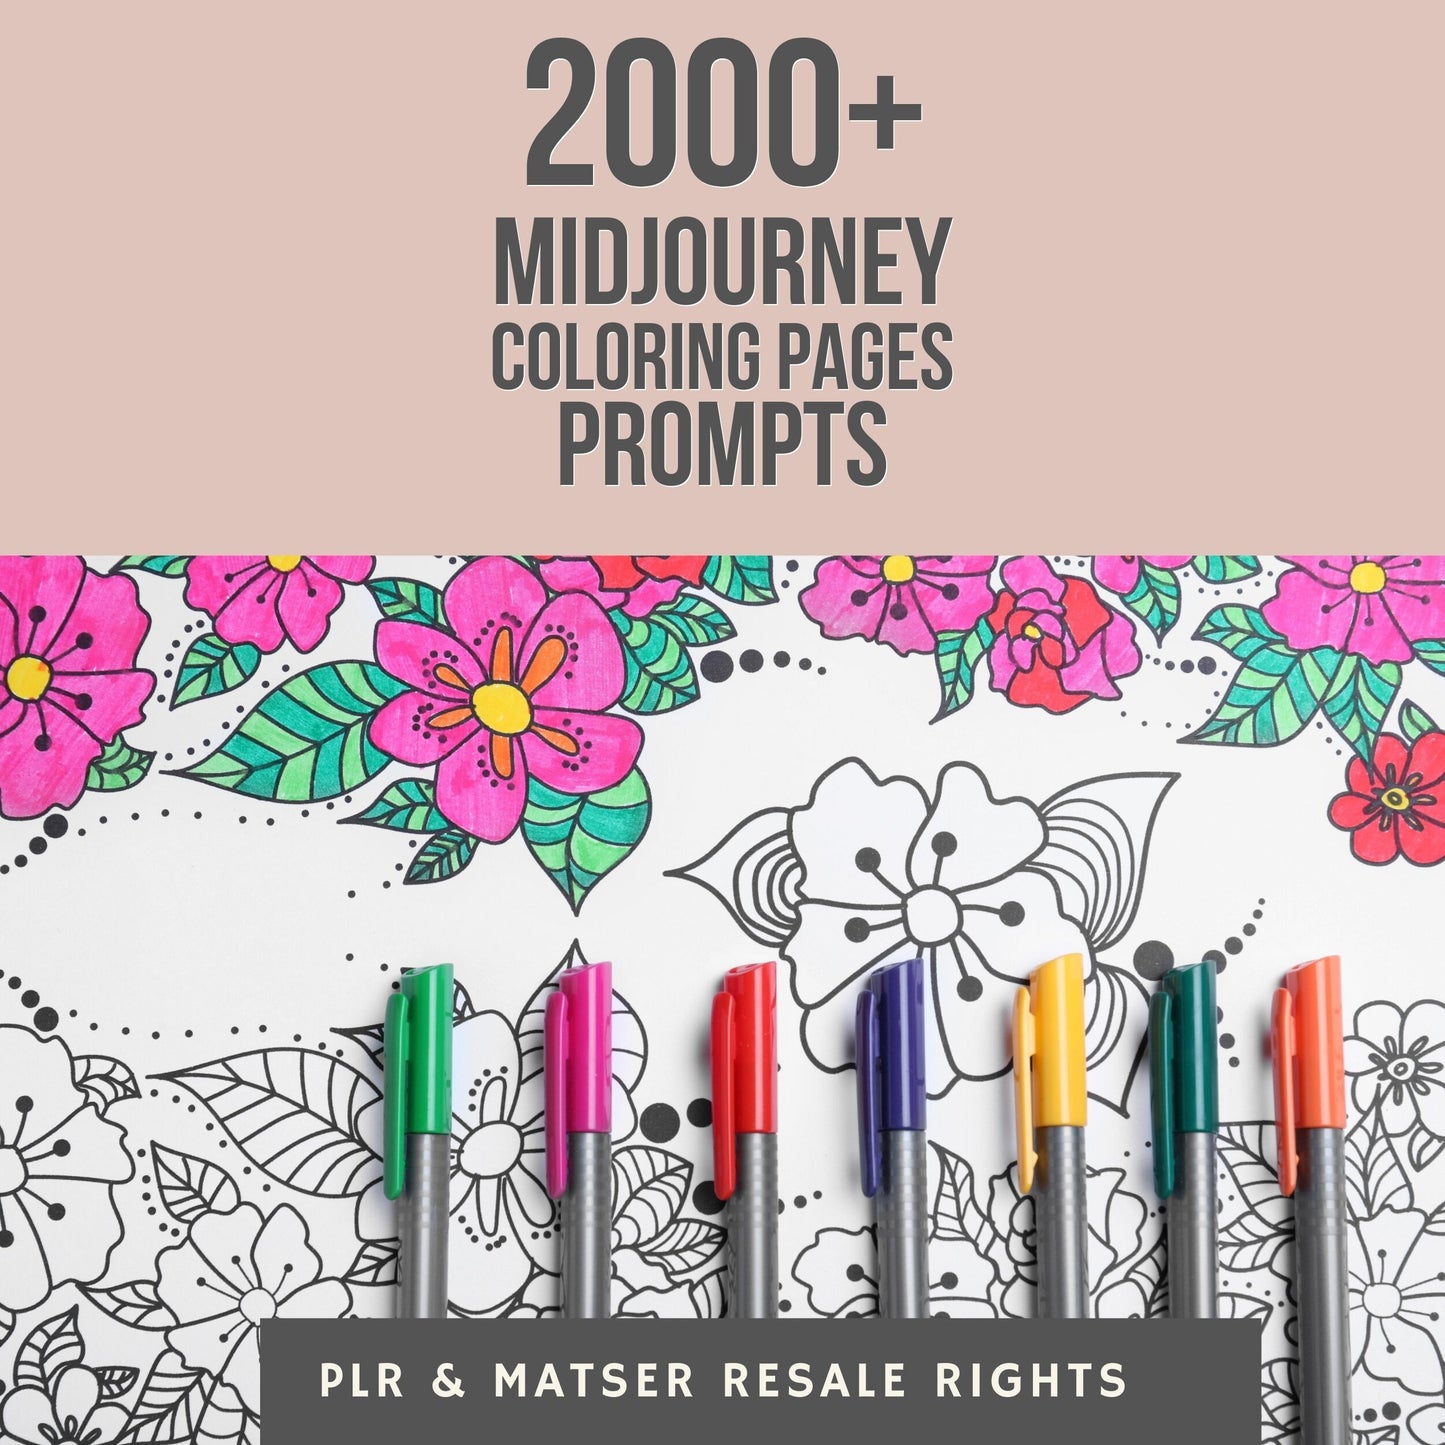 PLR Midjourney Prompts Bundle Master Resell Rights PLR Digital Products zum Verkauf auf Etsy Ai Art Prompts Passive Income Malbücher